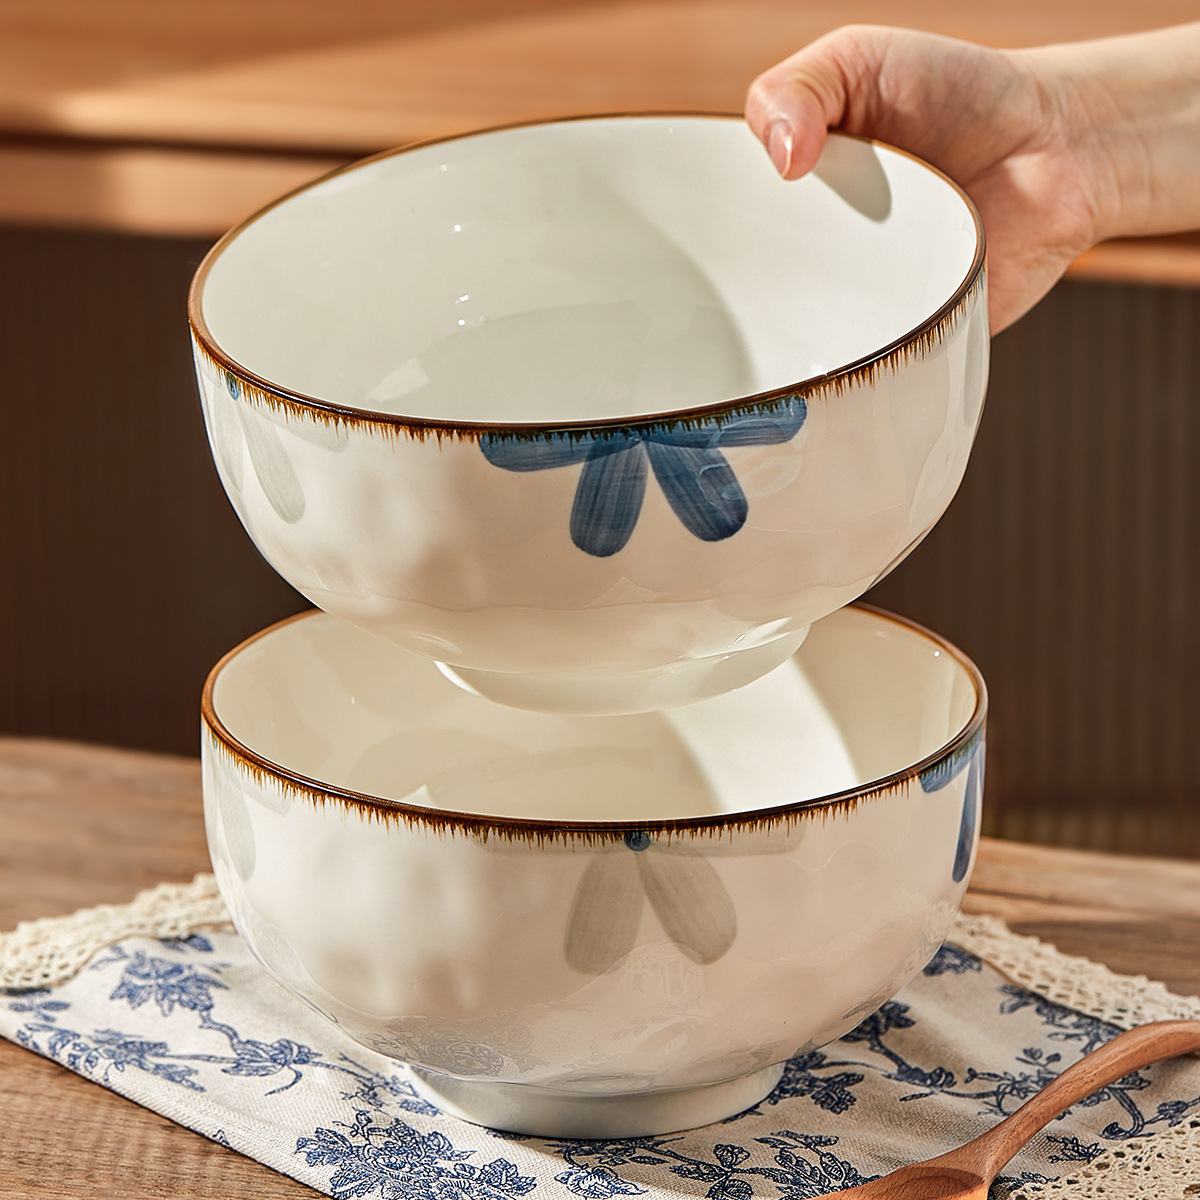 ceramic soup bowl large household large bowl noodle bowl 8-inch noodle bowl instant noodle bowl japanese style